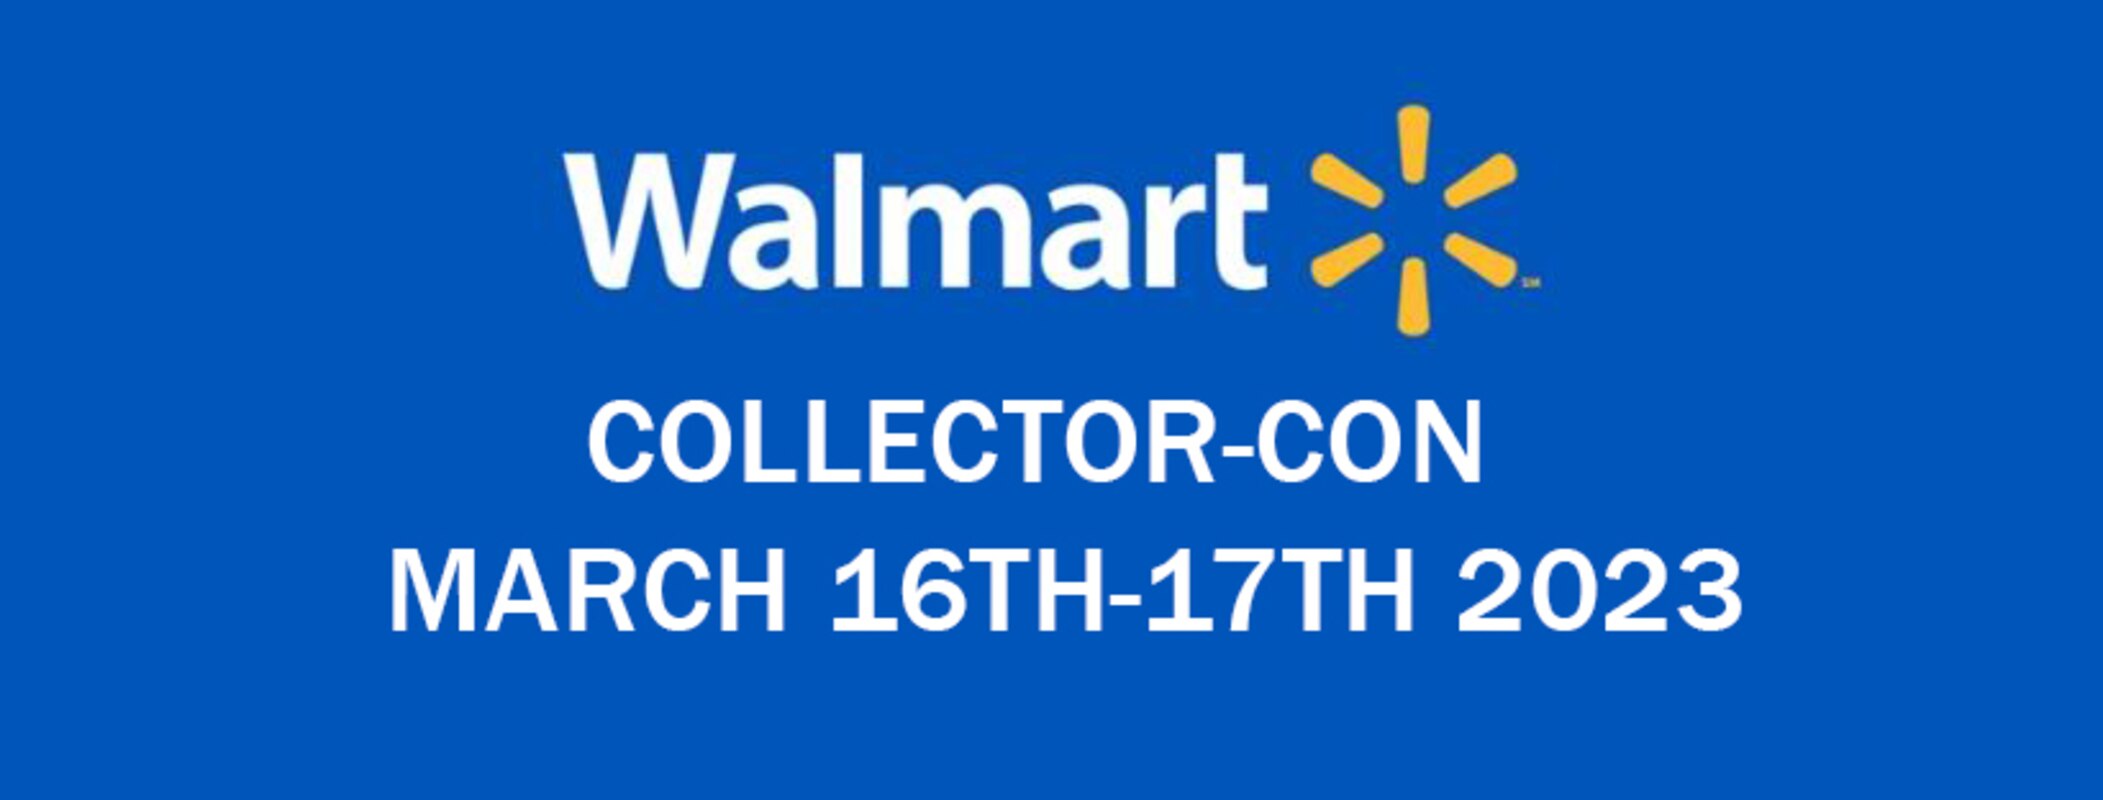 Walmart Spring Collector-Con Announced For March 16-17, 2023